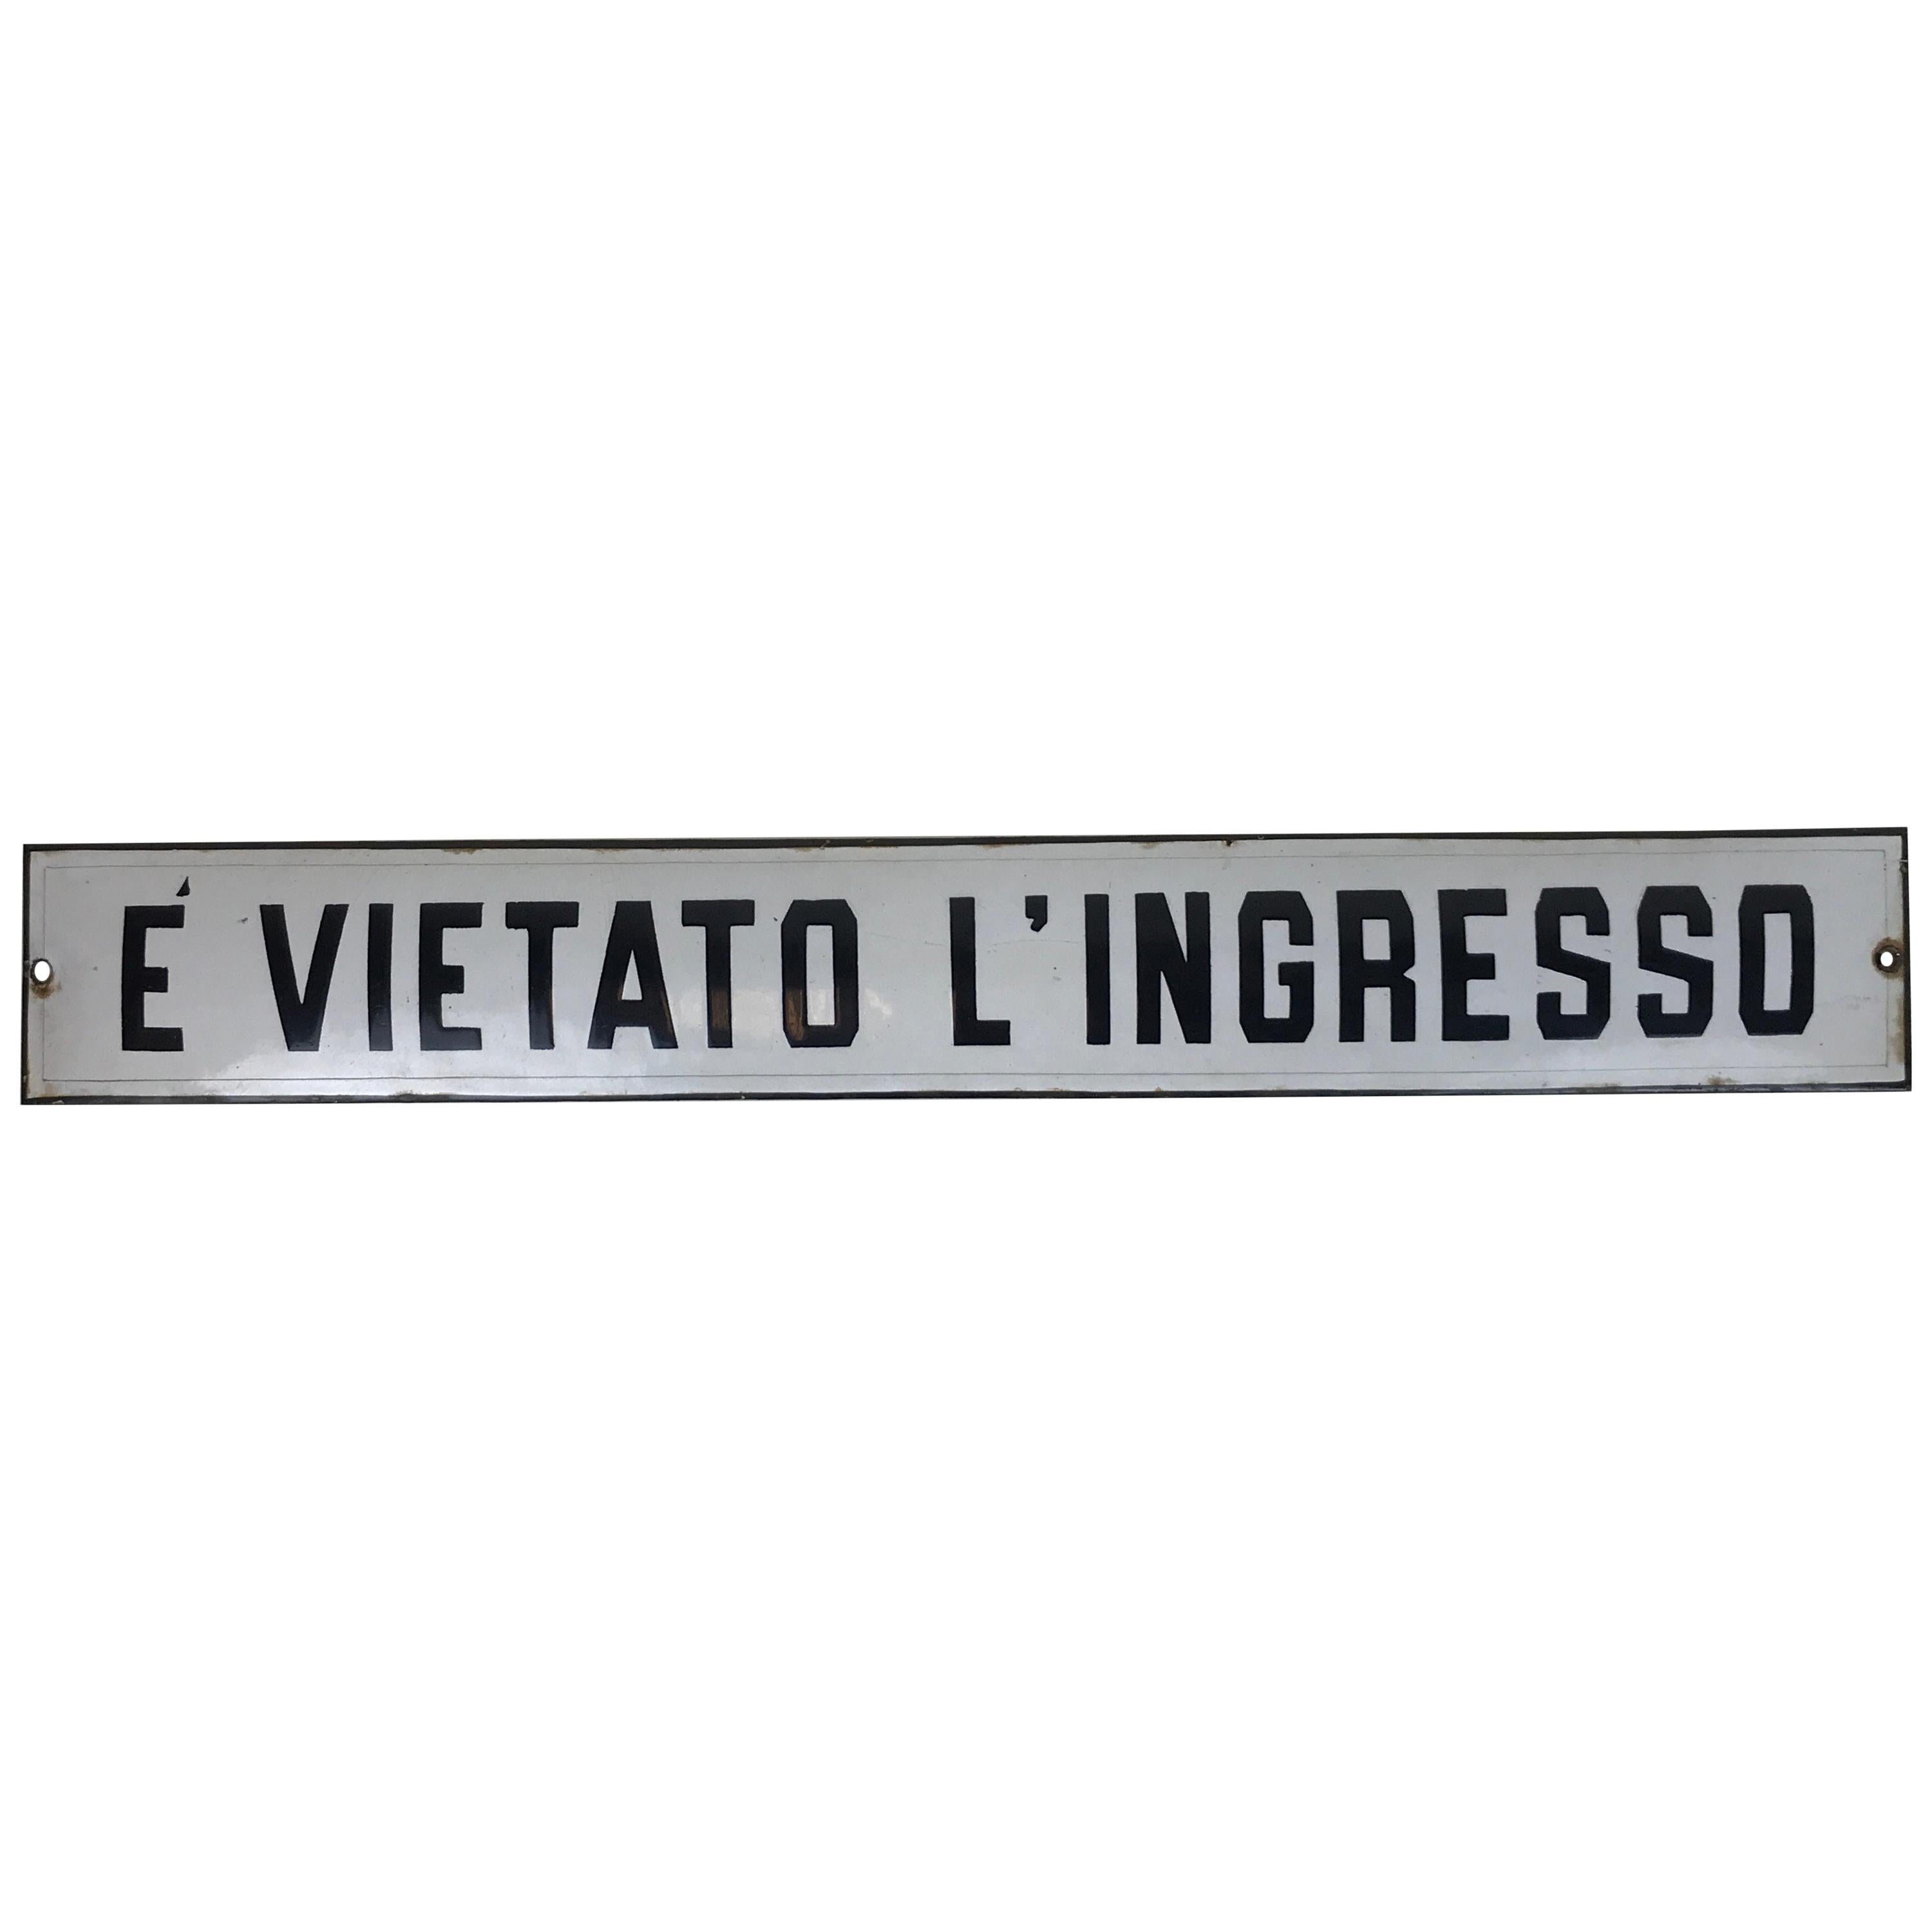 1930s Vintage Italian Enamel Metal Sign "E' Vietato l'Ingresso", ‘No Entry’ For Sale